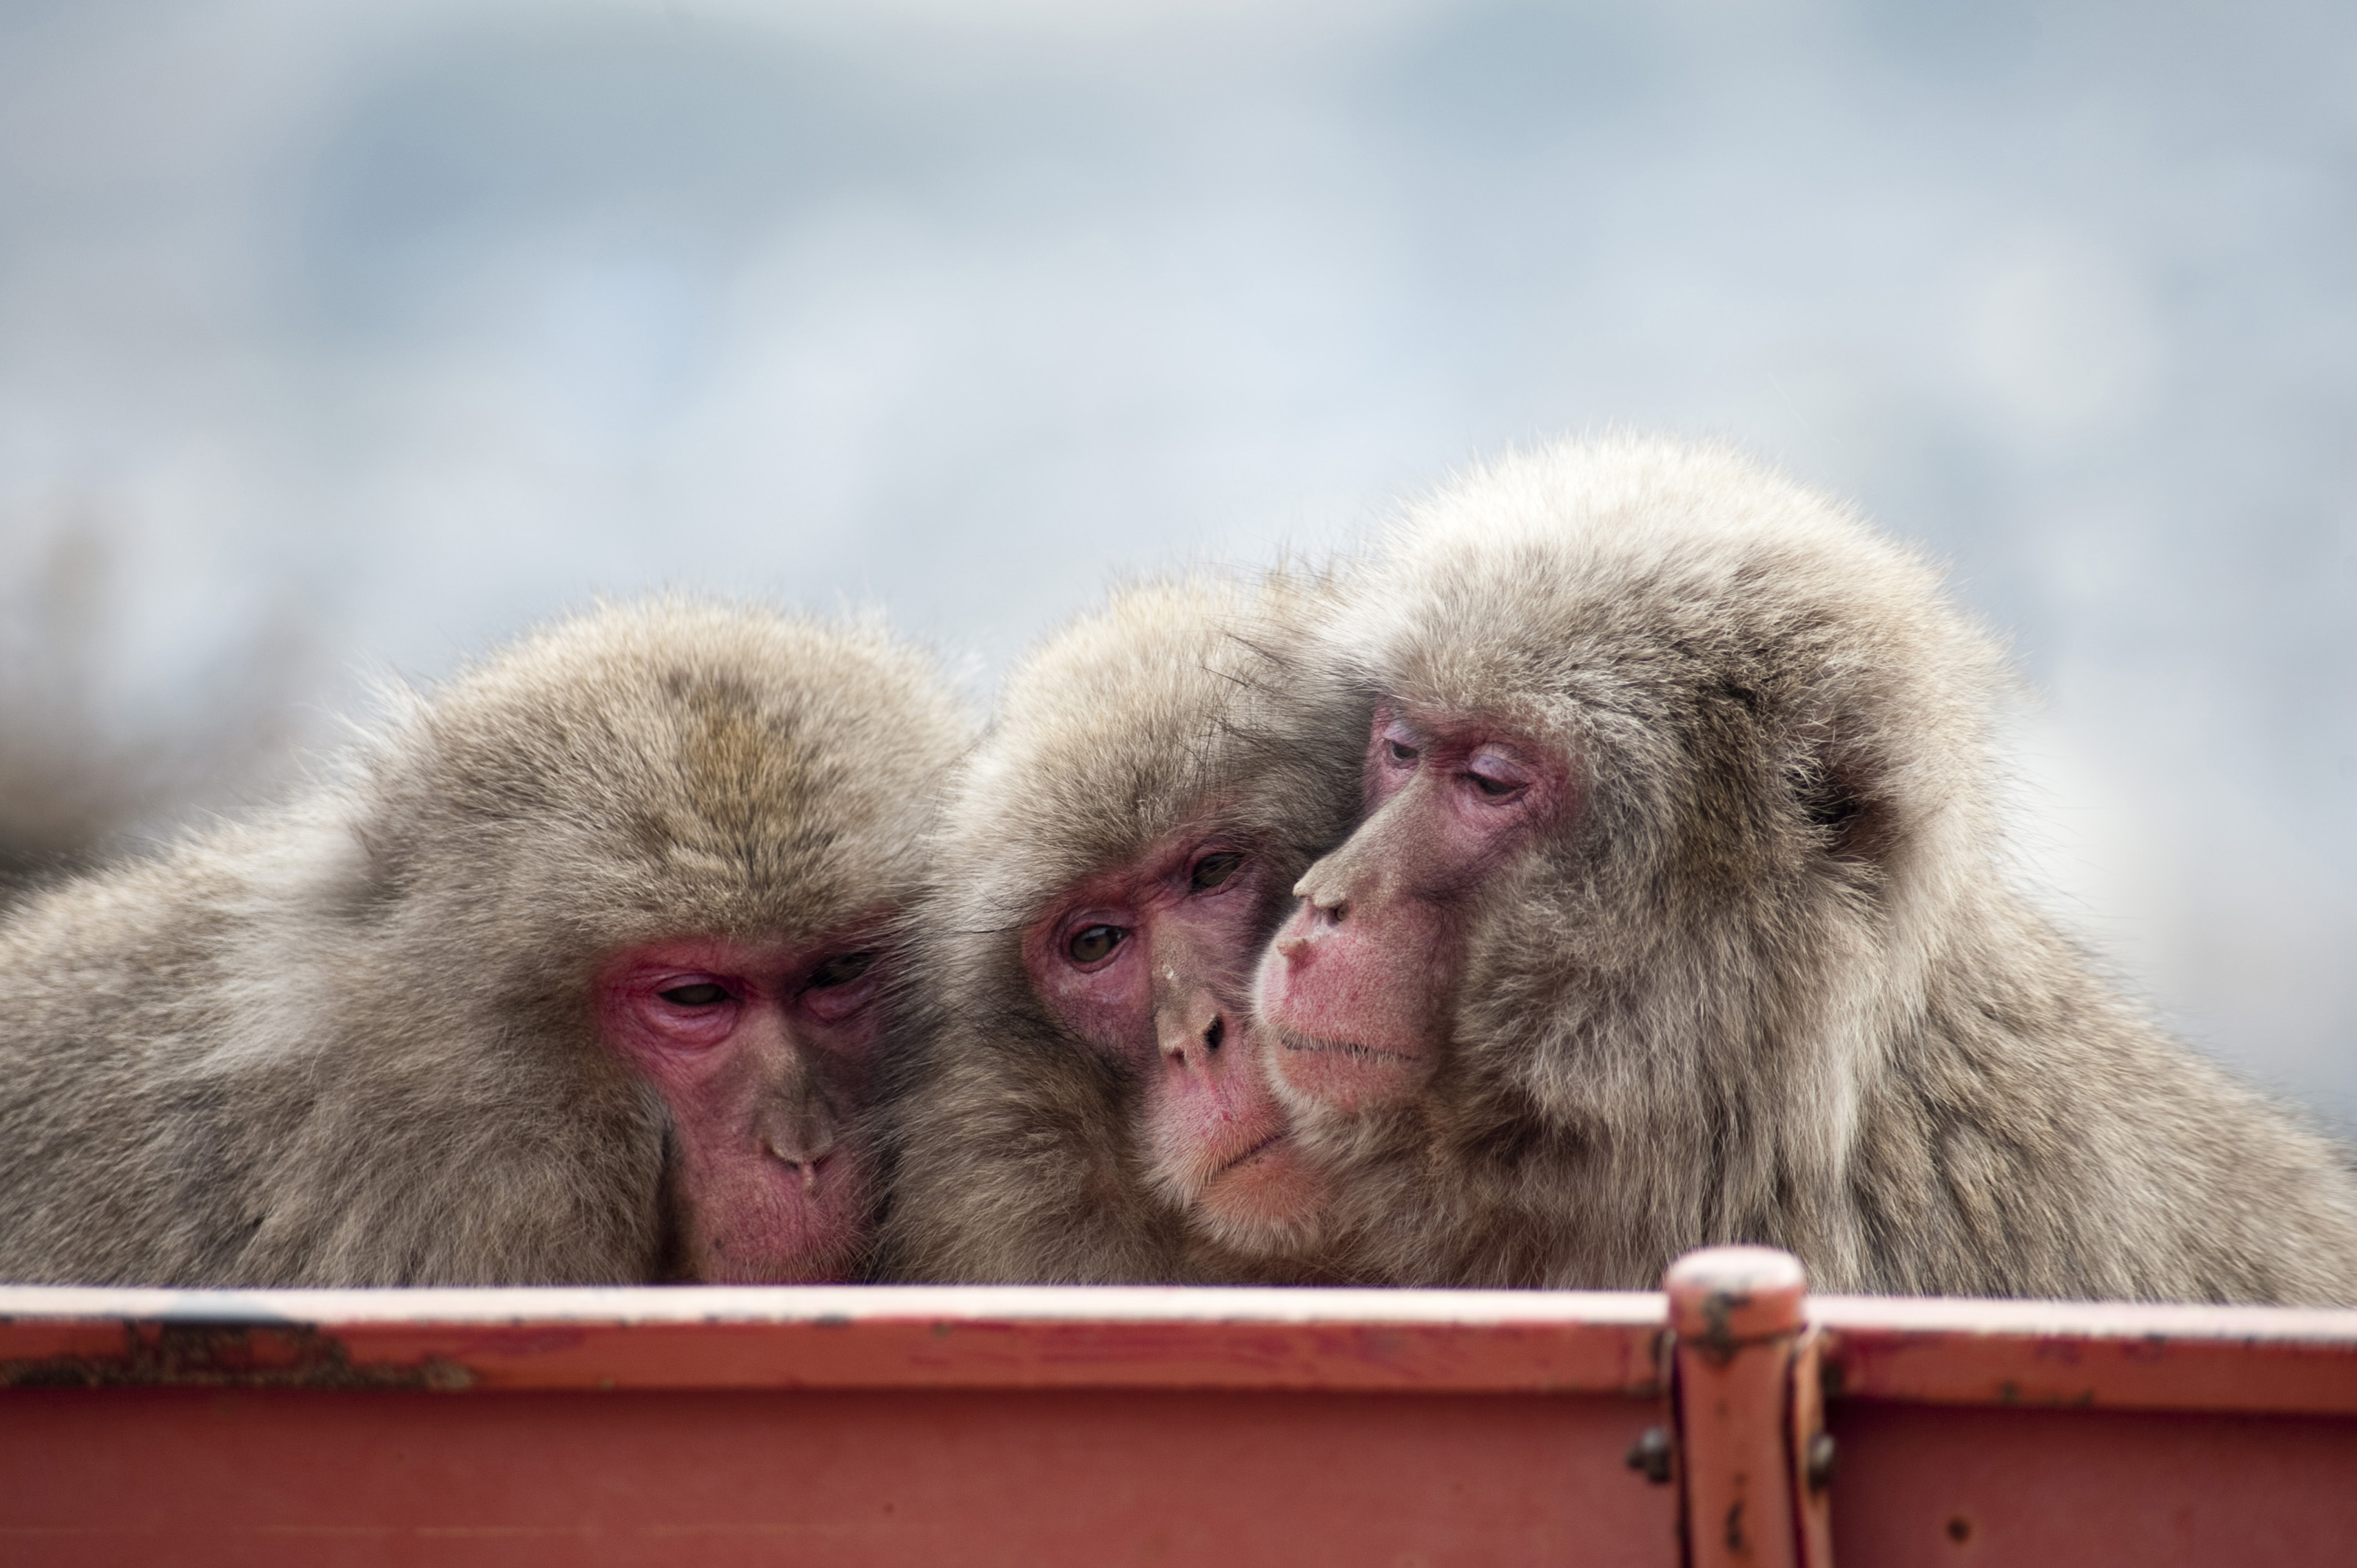 Три обезьяны. Заставка на рабочий стол три обезьяны. Три мартышки. Три обезьяны фото.